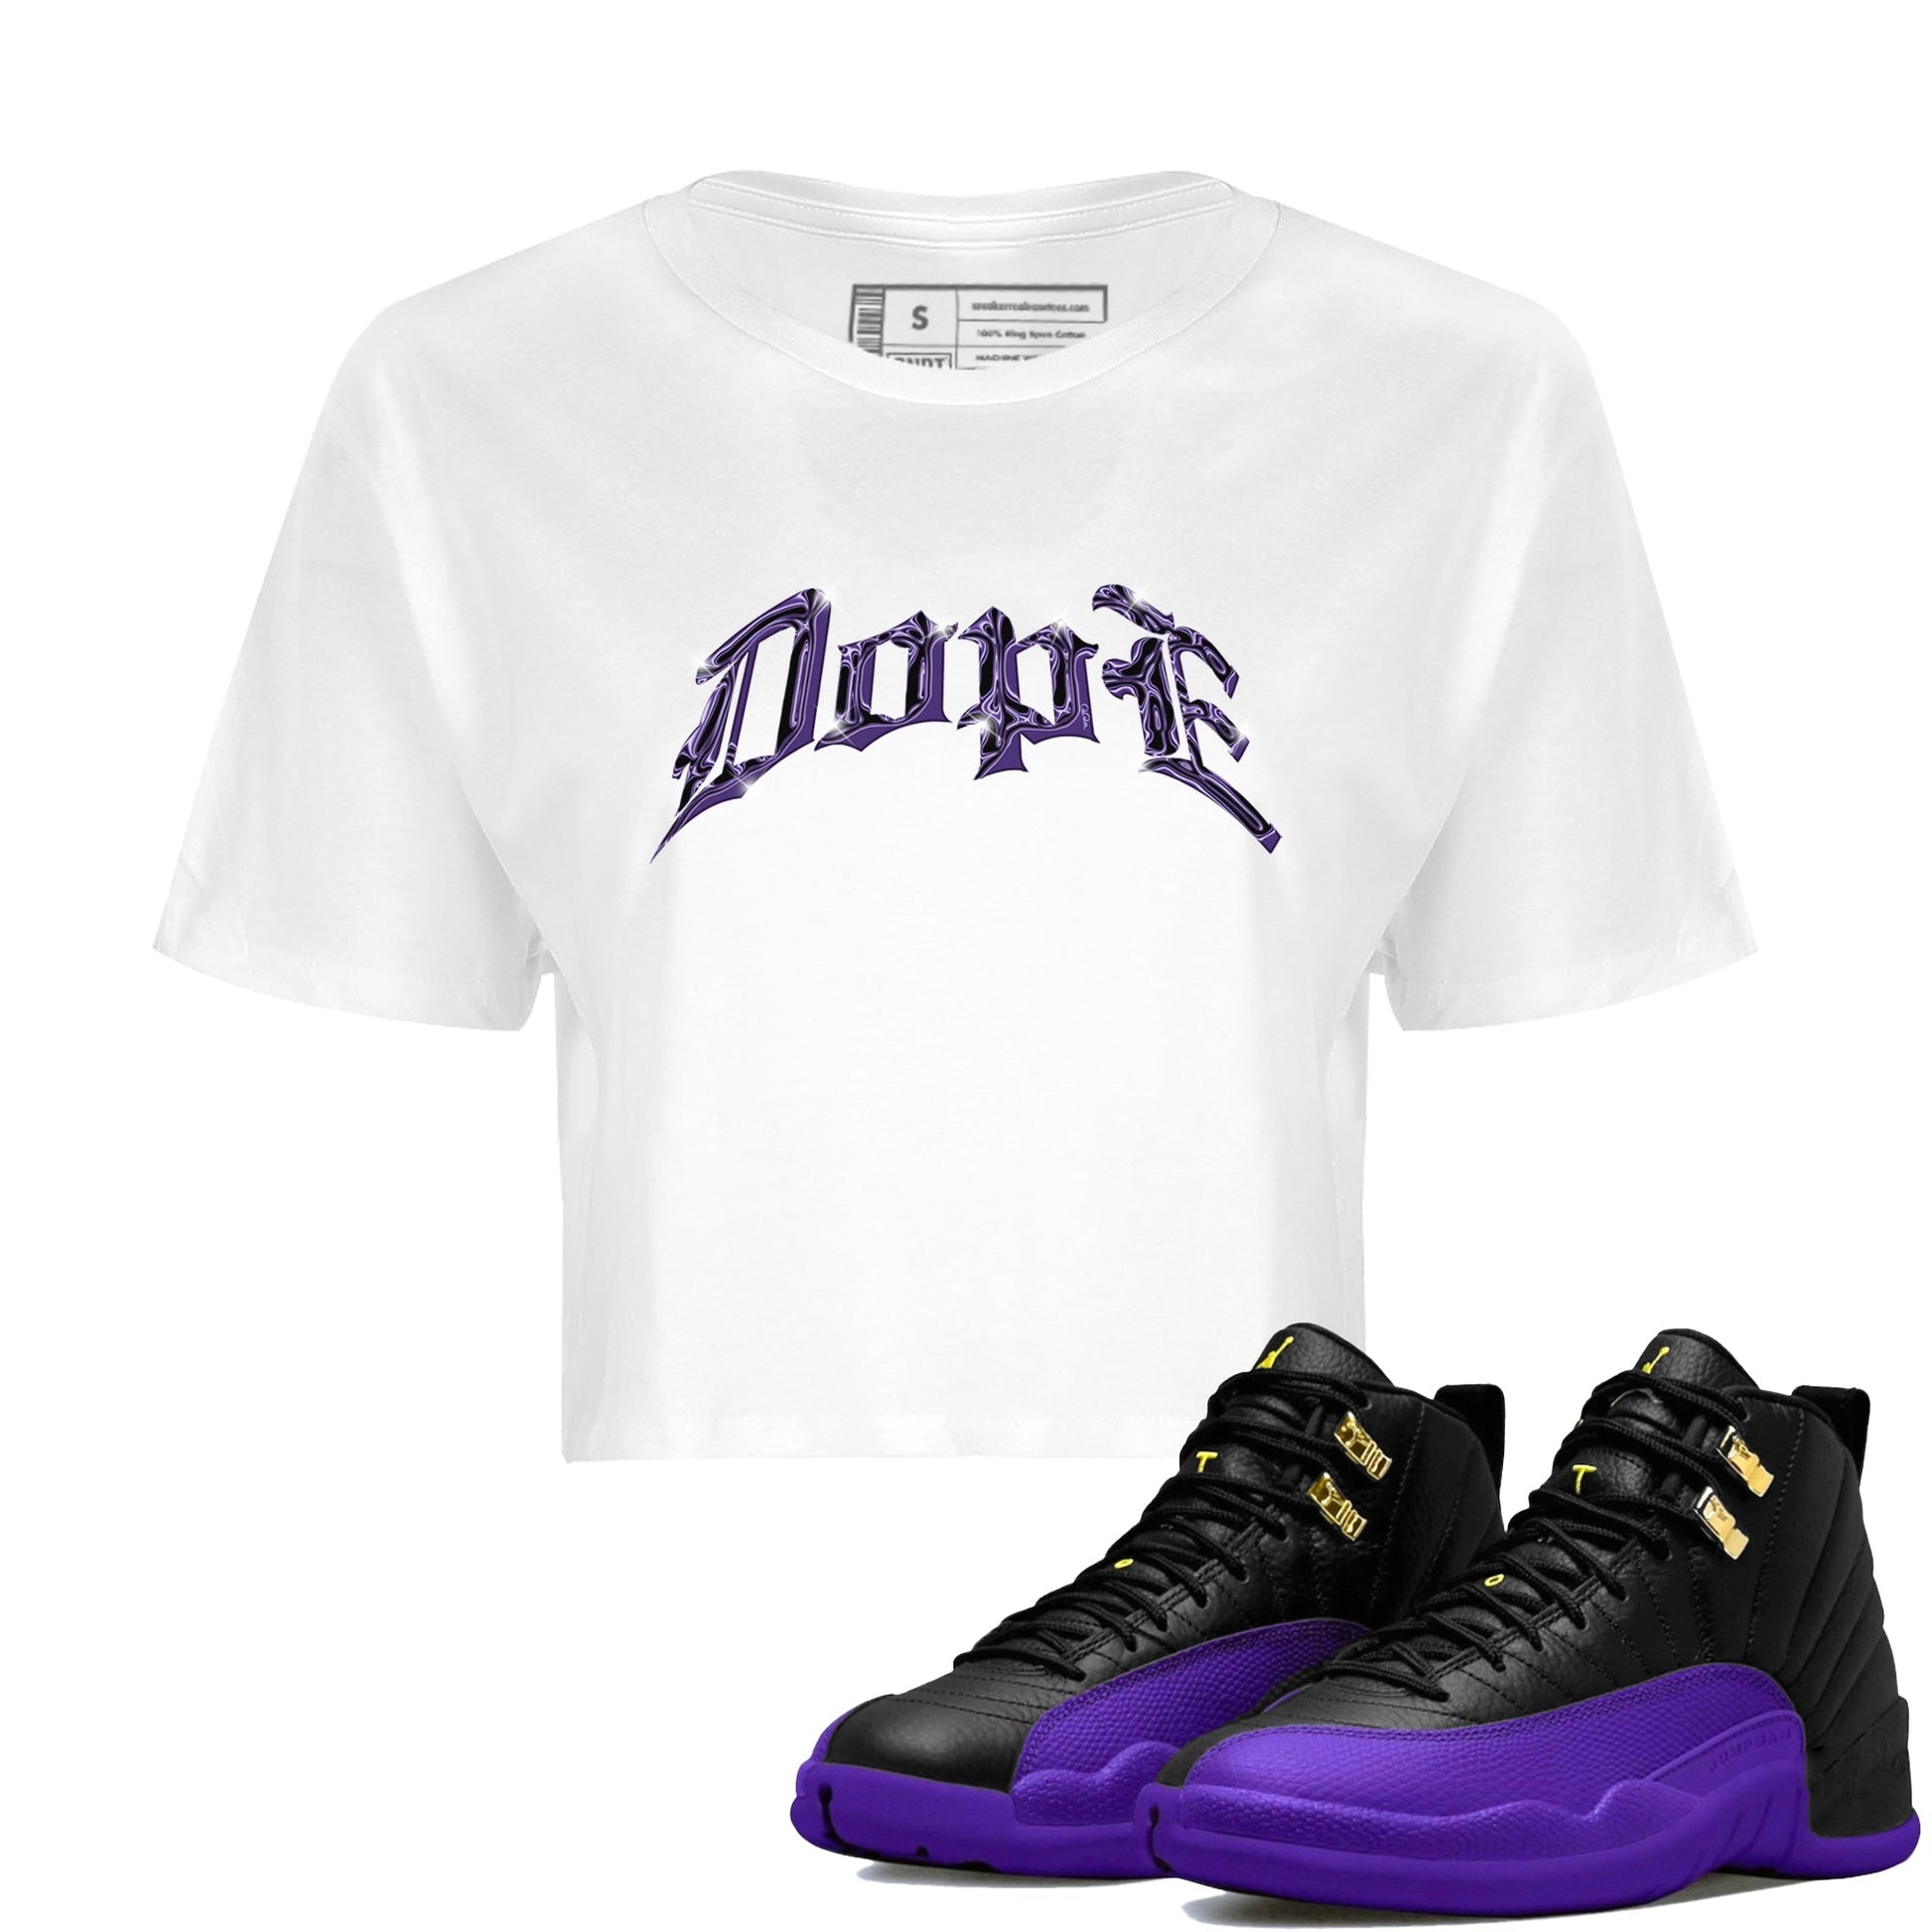 Air Jordan 12 Field Purple Sneaker Match Tees Dope Sneaker Tees AJ12 Field Purple Sneaker Release Tees Women's Shirts White 1